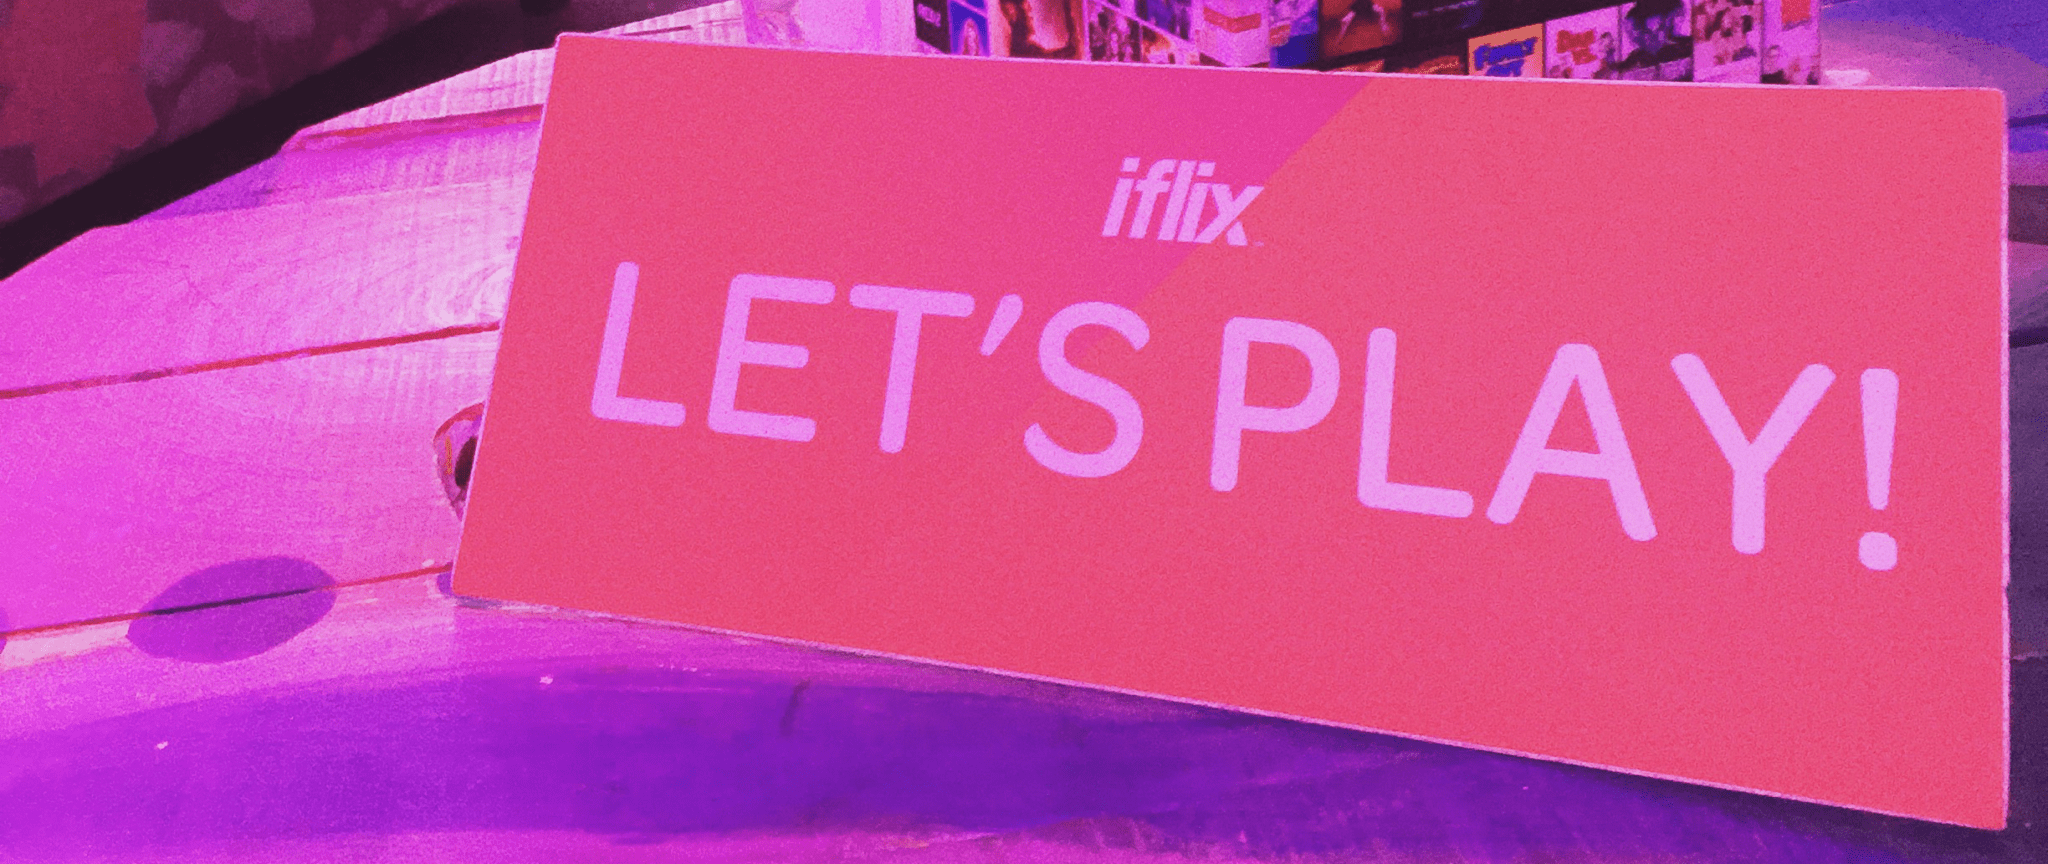 iflix hotspots cebu event header